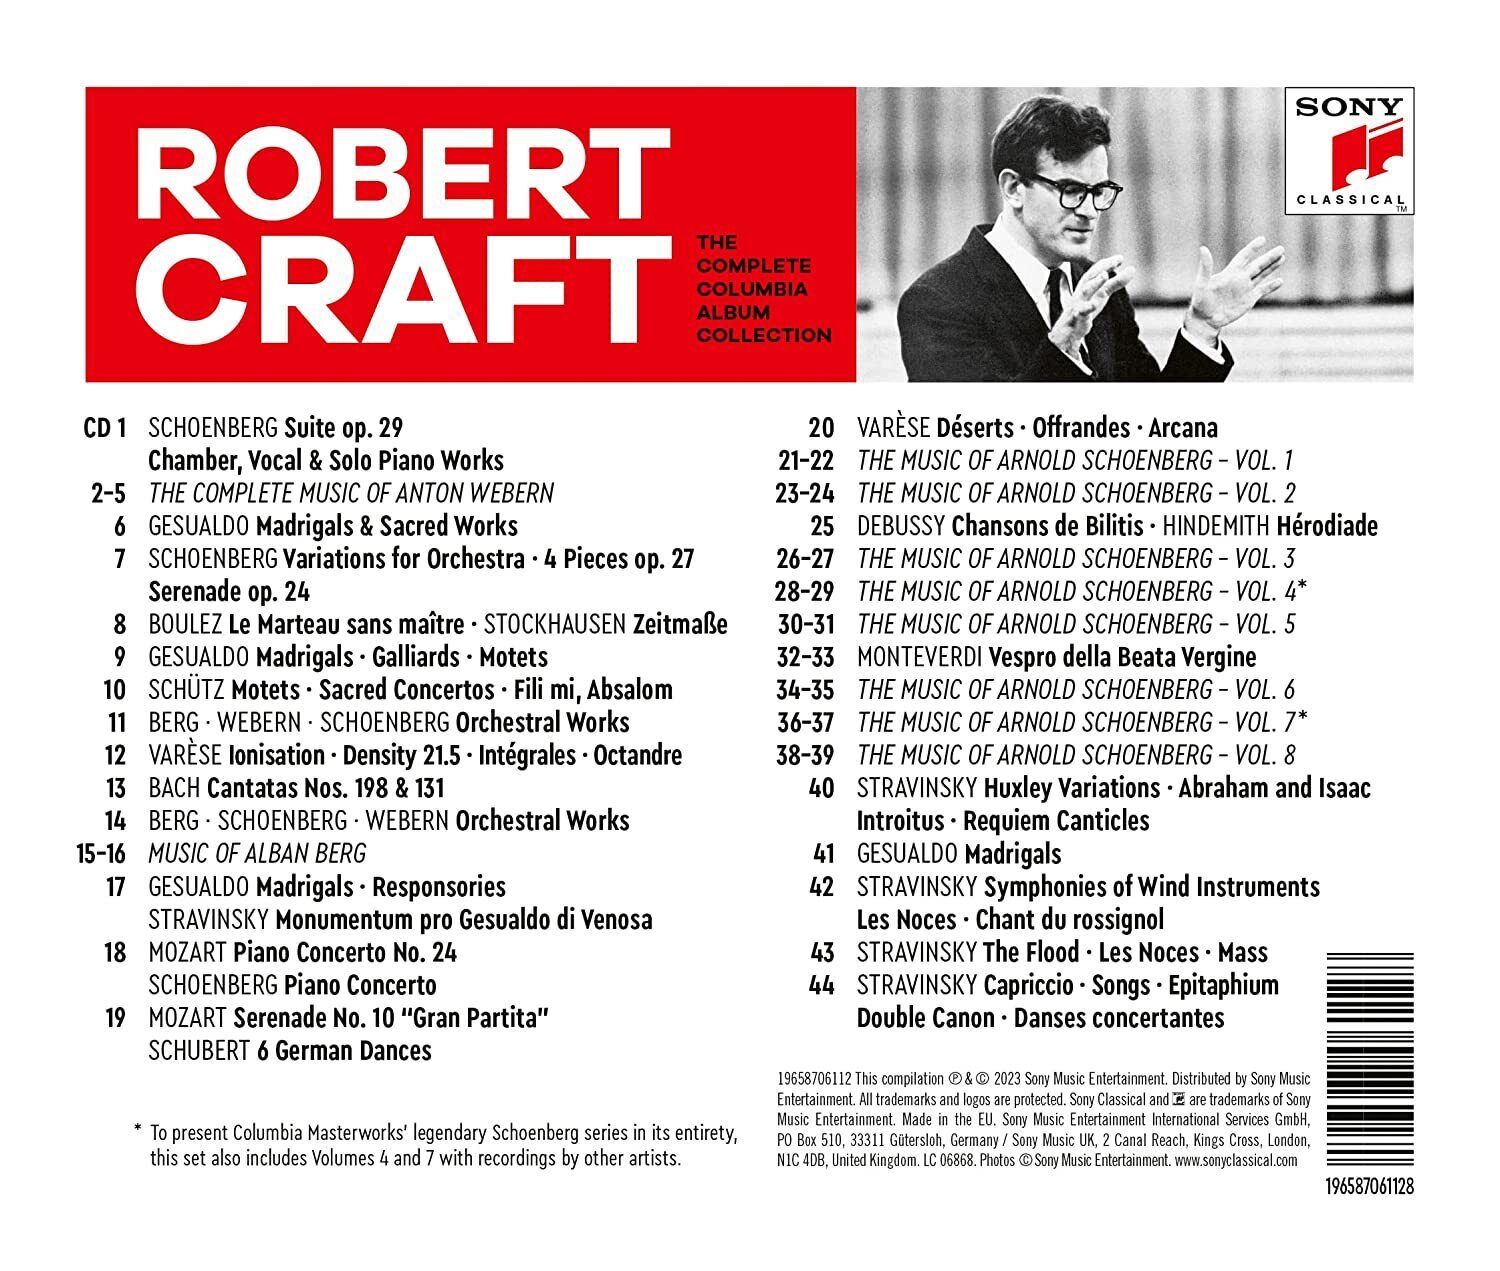 Robert Craft 로버트 크래프트 컬럼비아 앨범 컬렉션 (The Complete Columbia Album Collection)